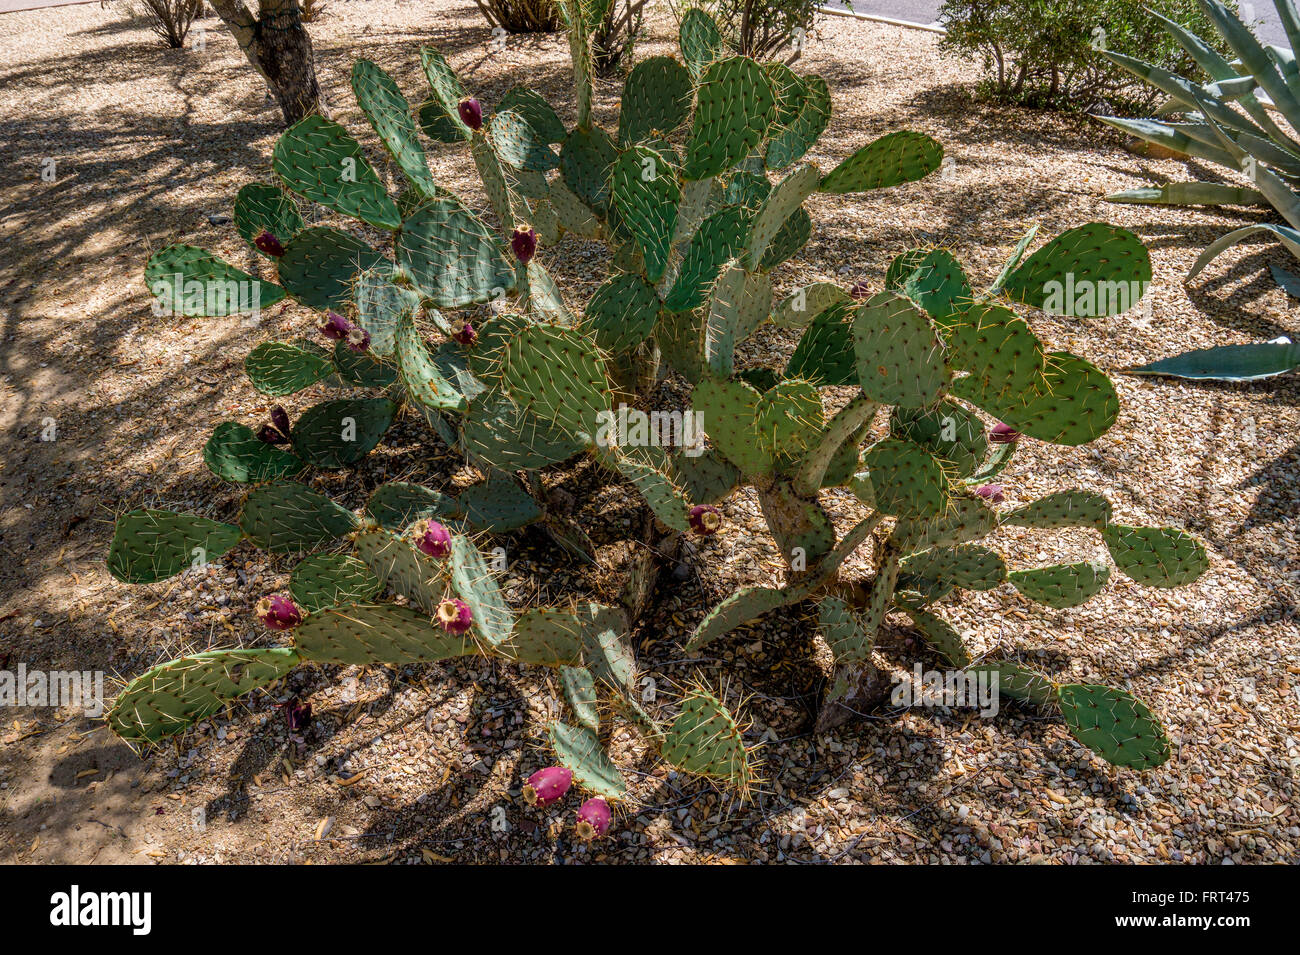 Echinocactus grusonii aka Golden Barrel Cactus in the Arizona Desert Stock Photo